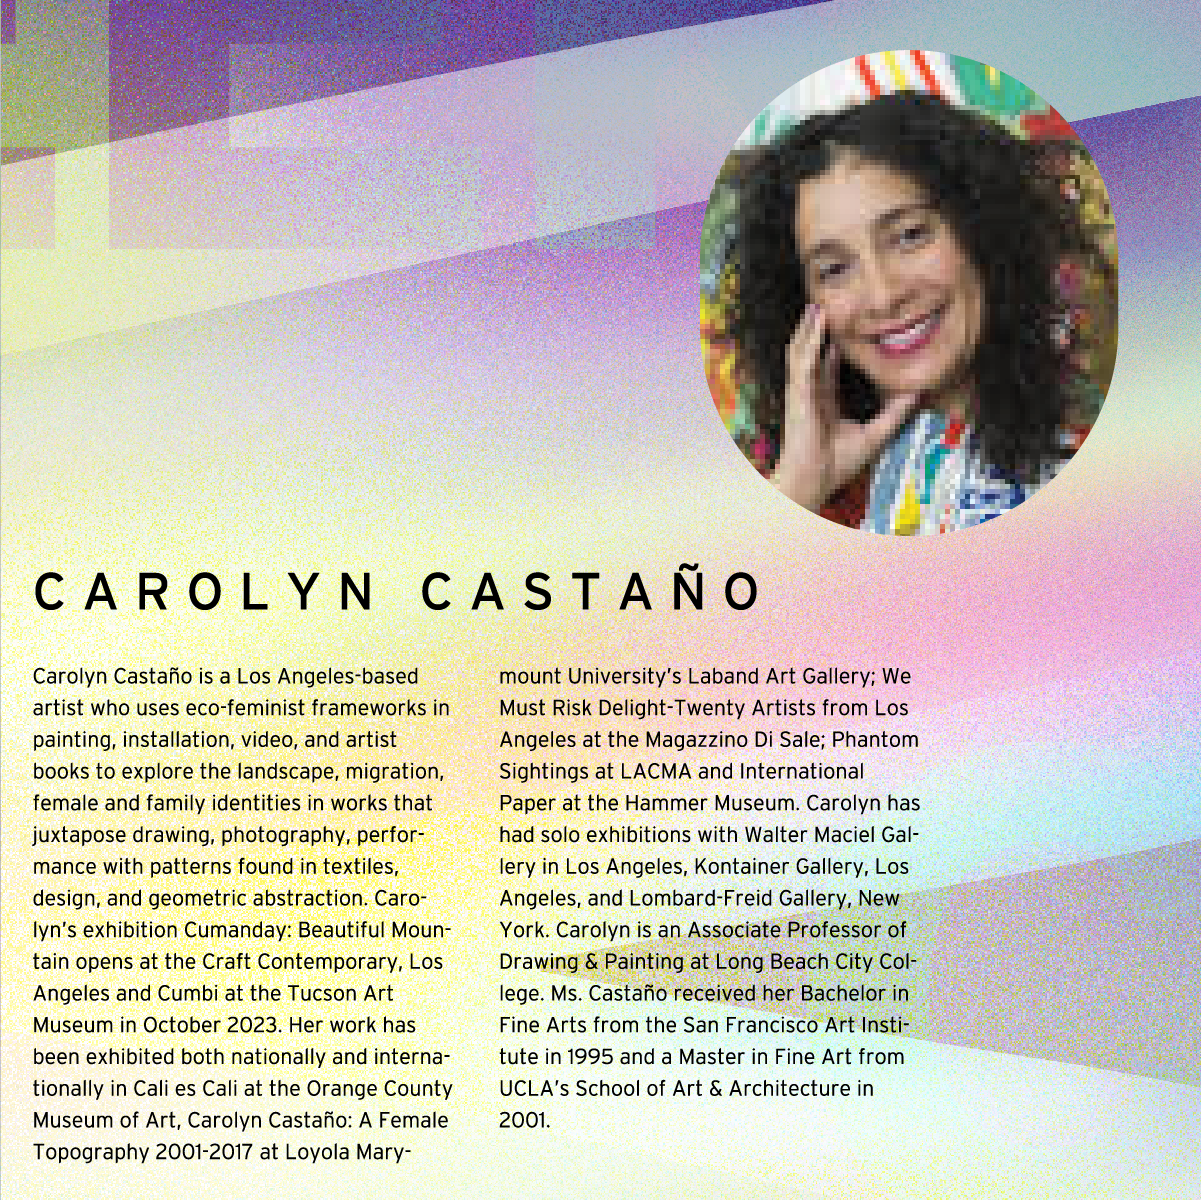 CSULB School of Art - Graduate Critique Week - Visiting Artist Carolyn Castaño